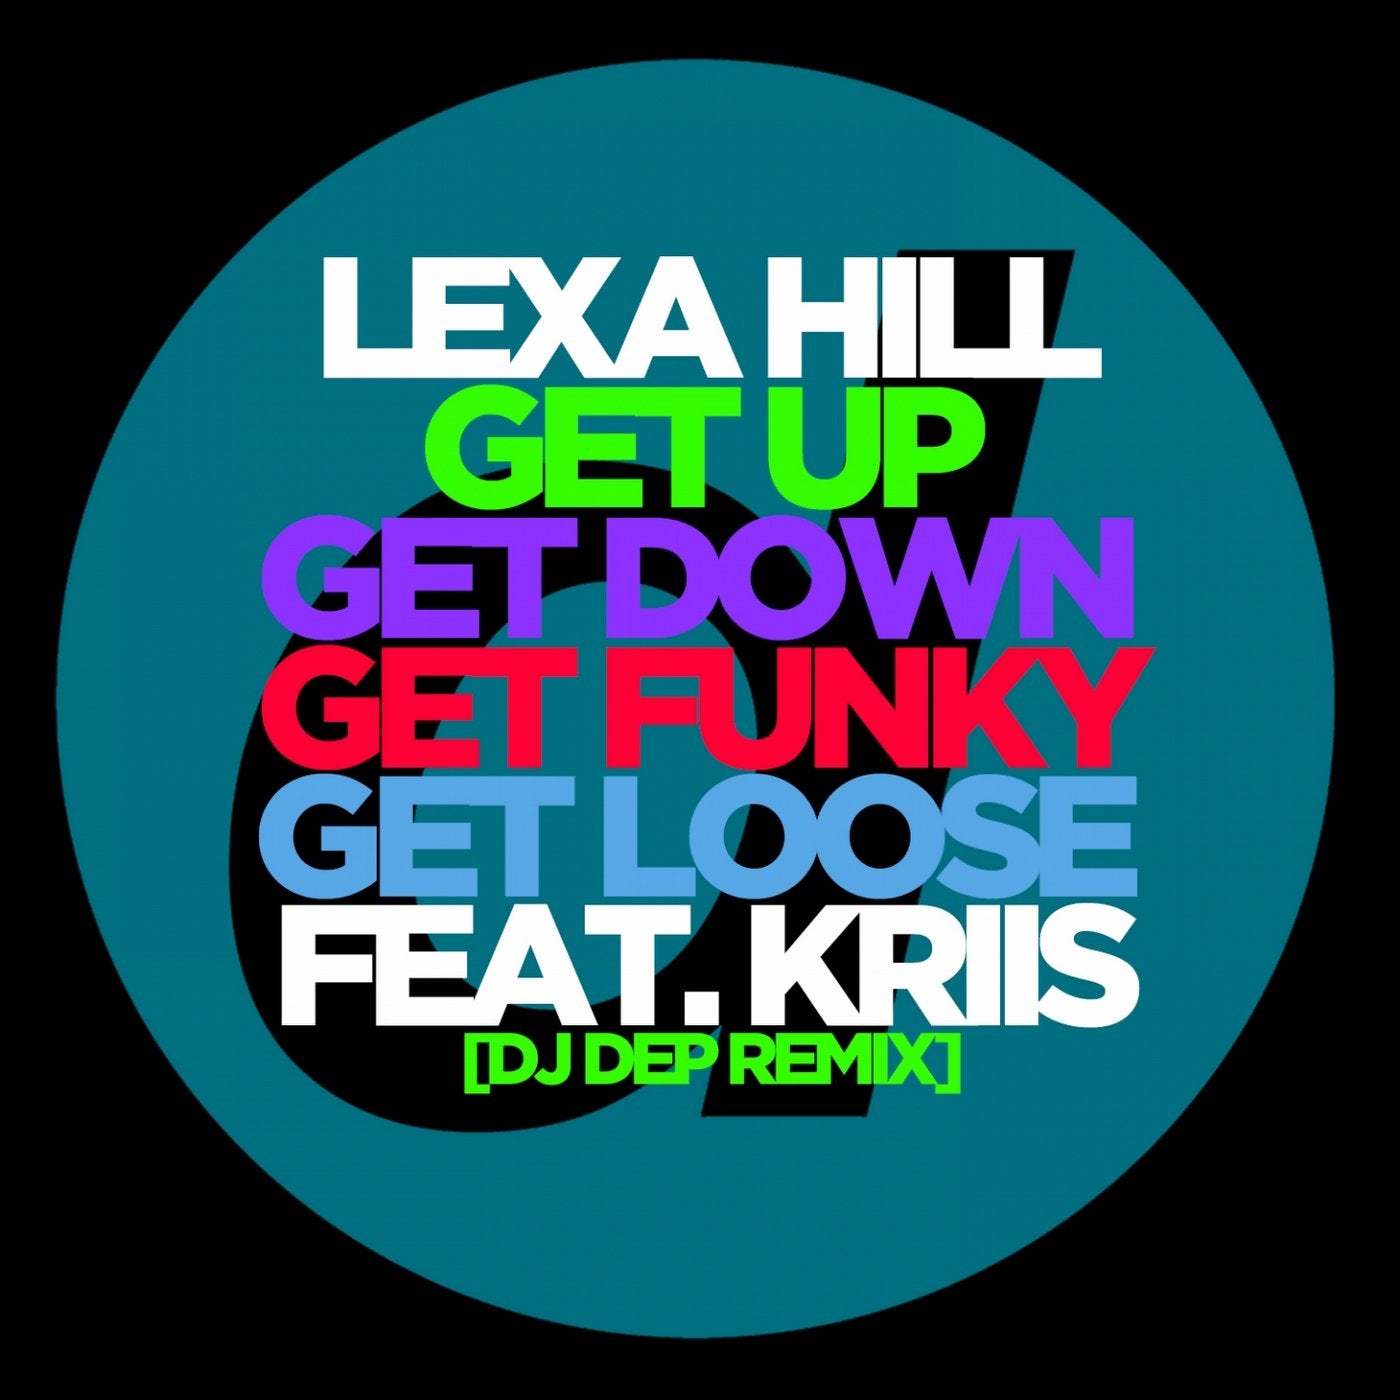 Get Up, Get Down, Get Funky, Get Loose (feat. Kriis) [DJ Dep Remix]